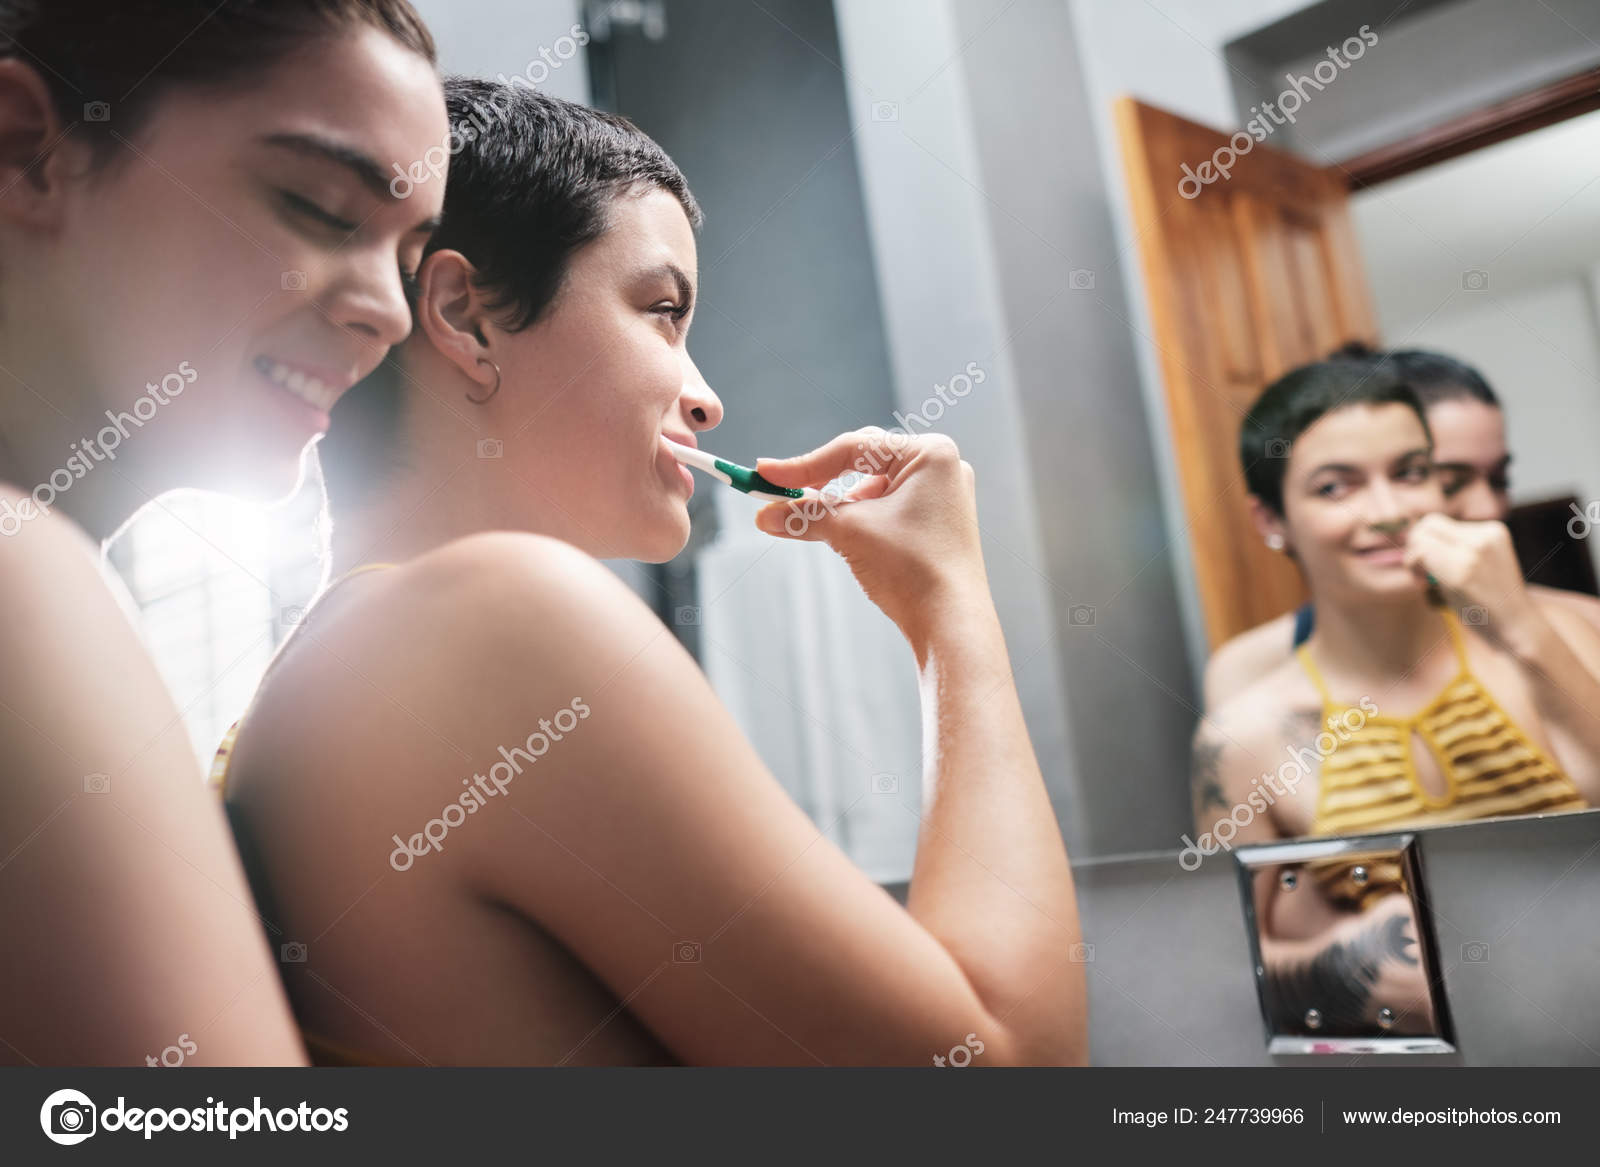 lesbian girls in the shower